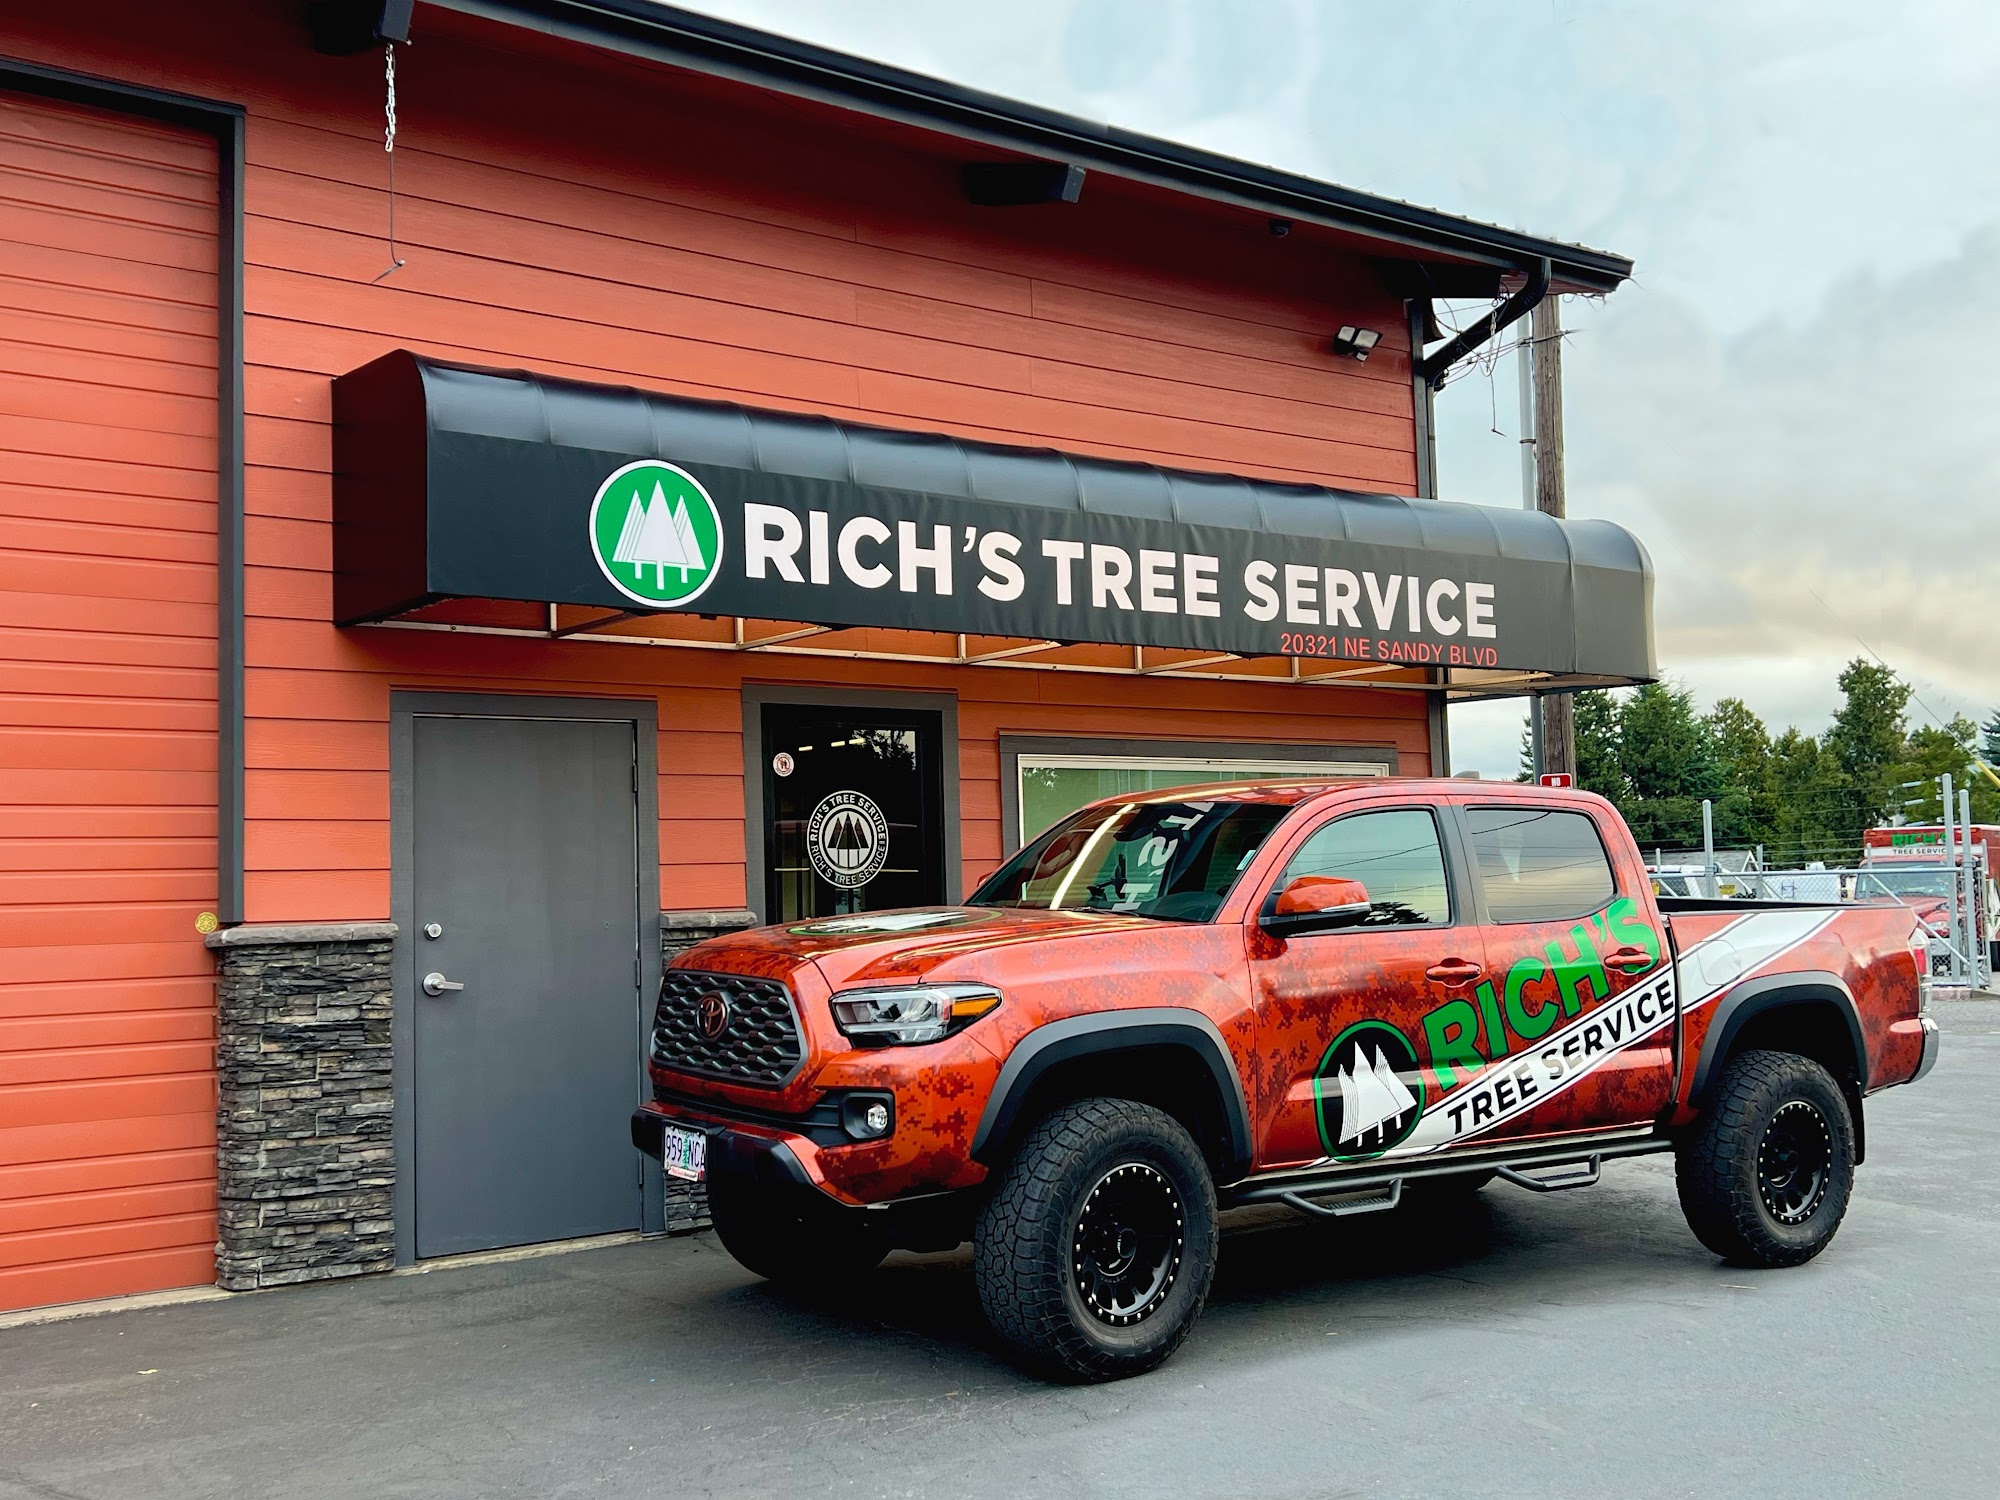 Rich's Tree Service, Inc RICH"S TREE SERVICE, 20321 NE Sandy Blvd, Fairview Oregon 97024